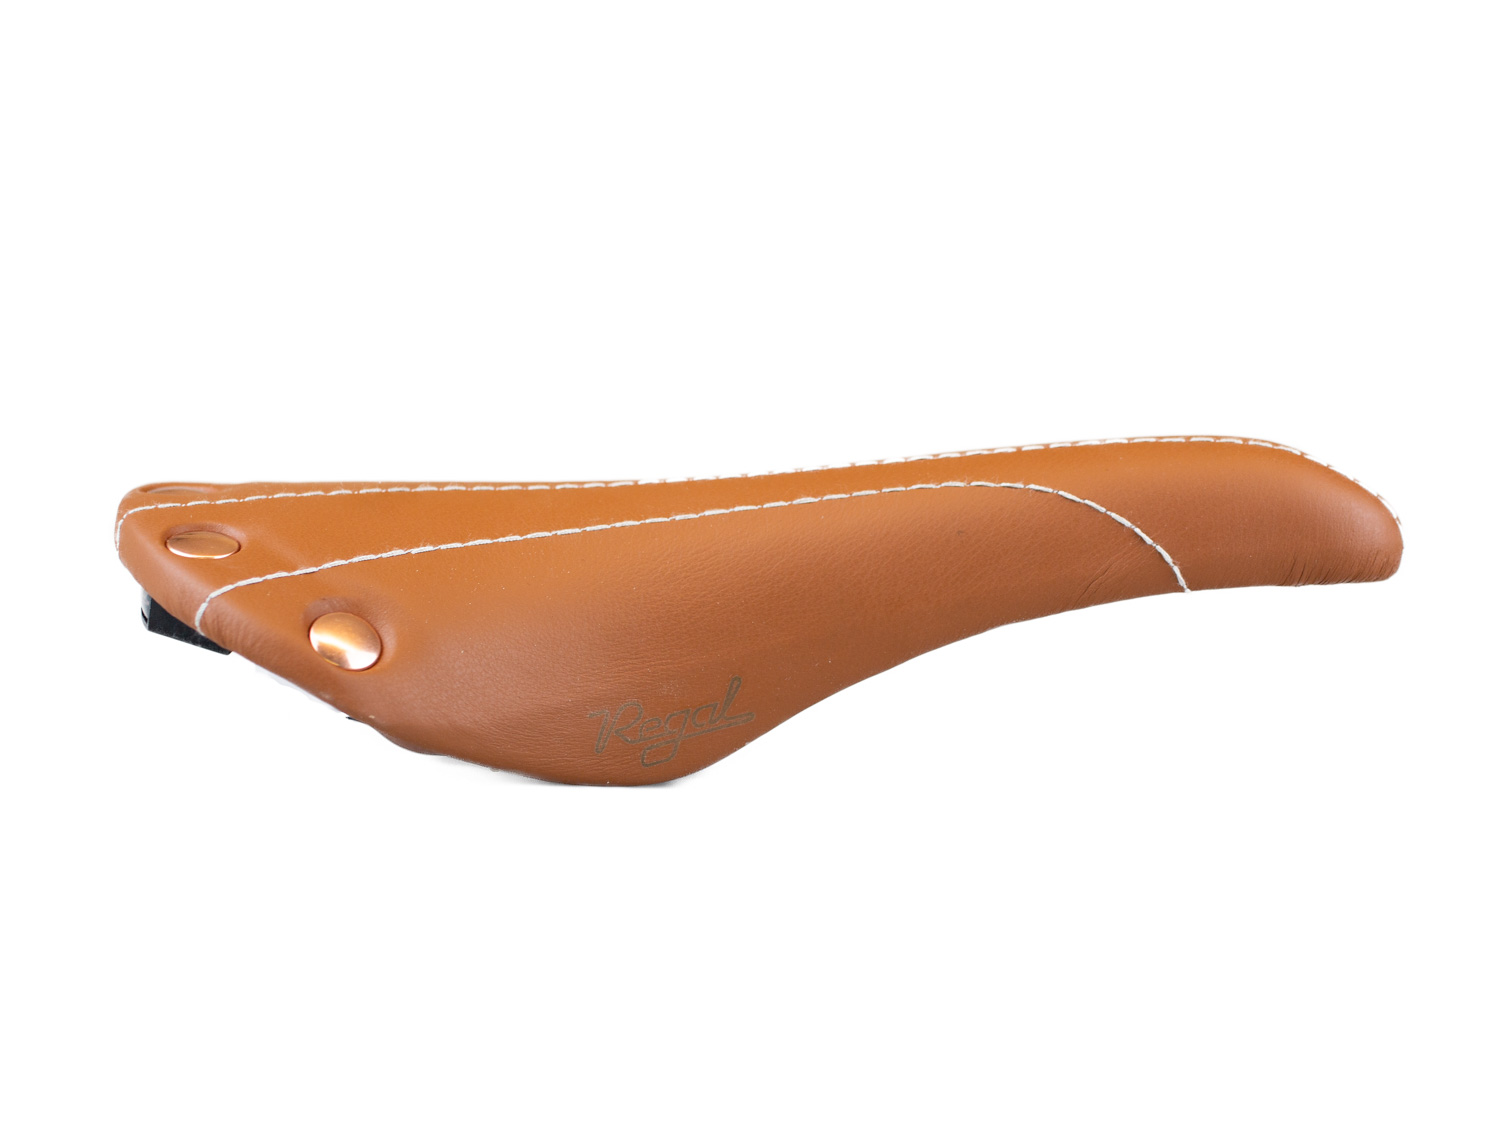 San Marco Regal Brown Leather L1 - SALE